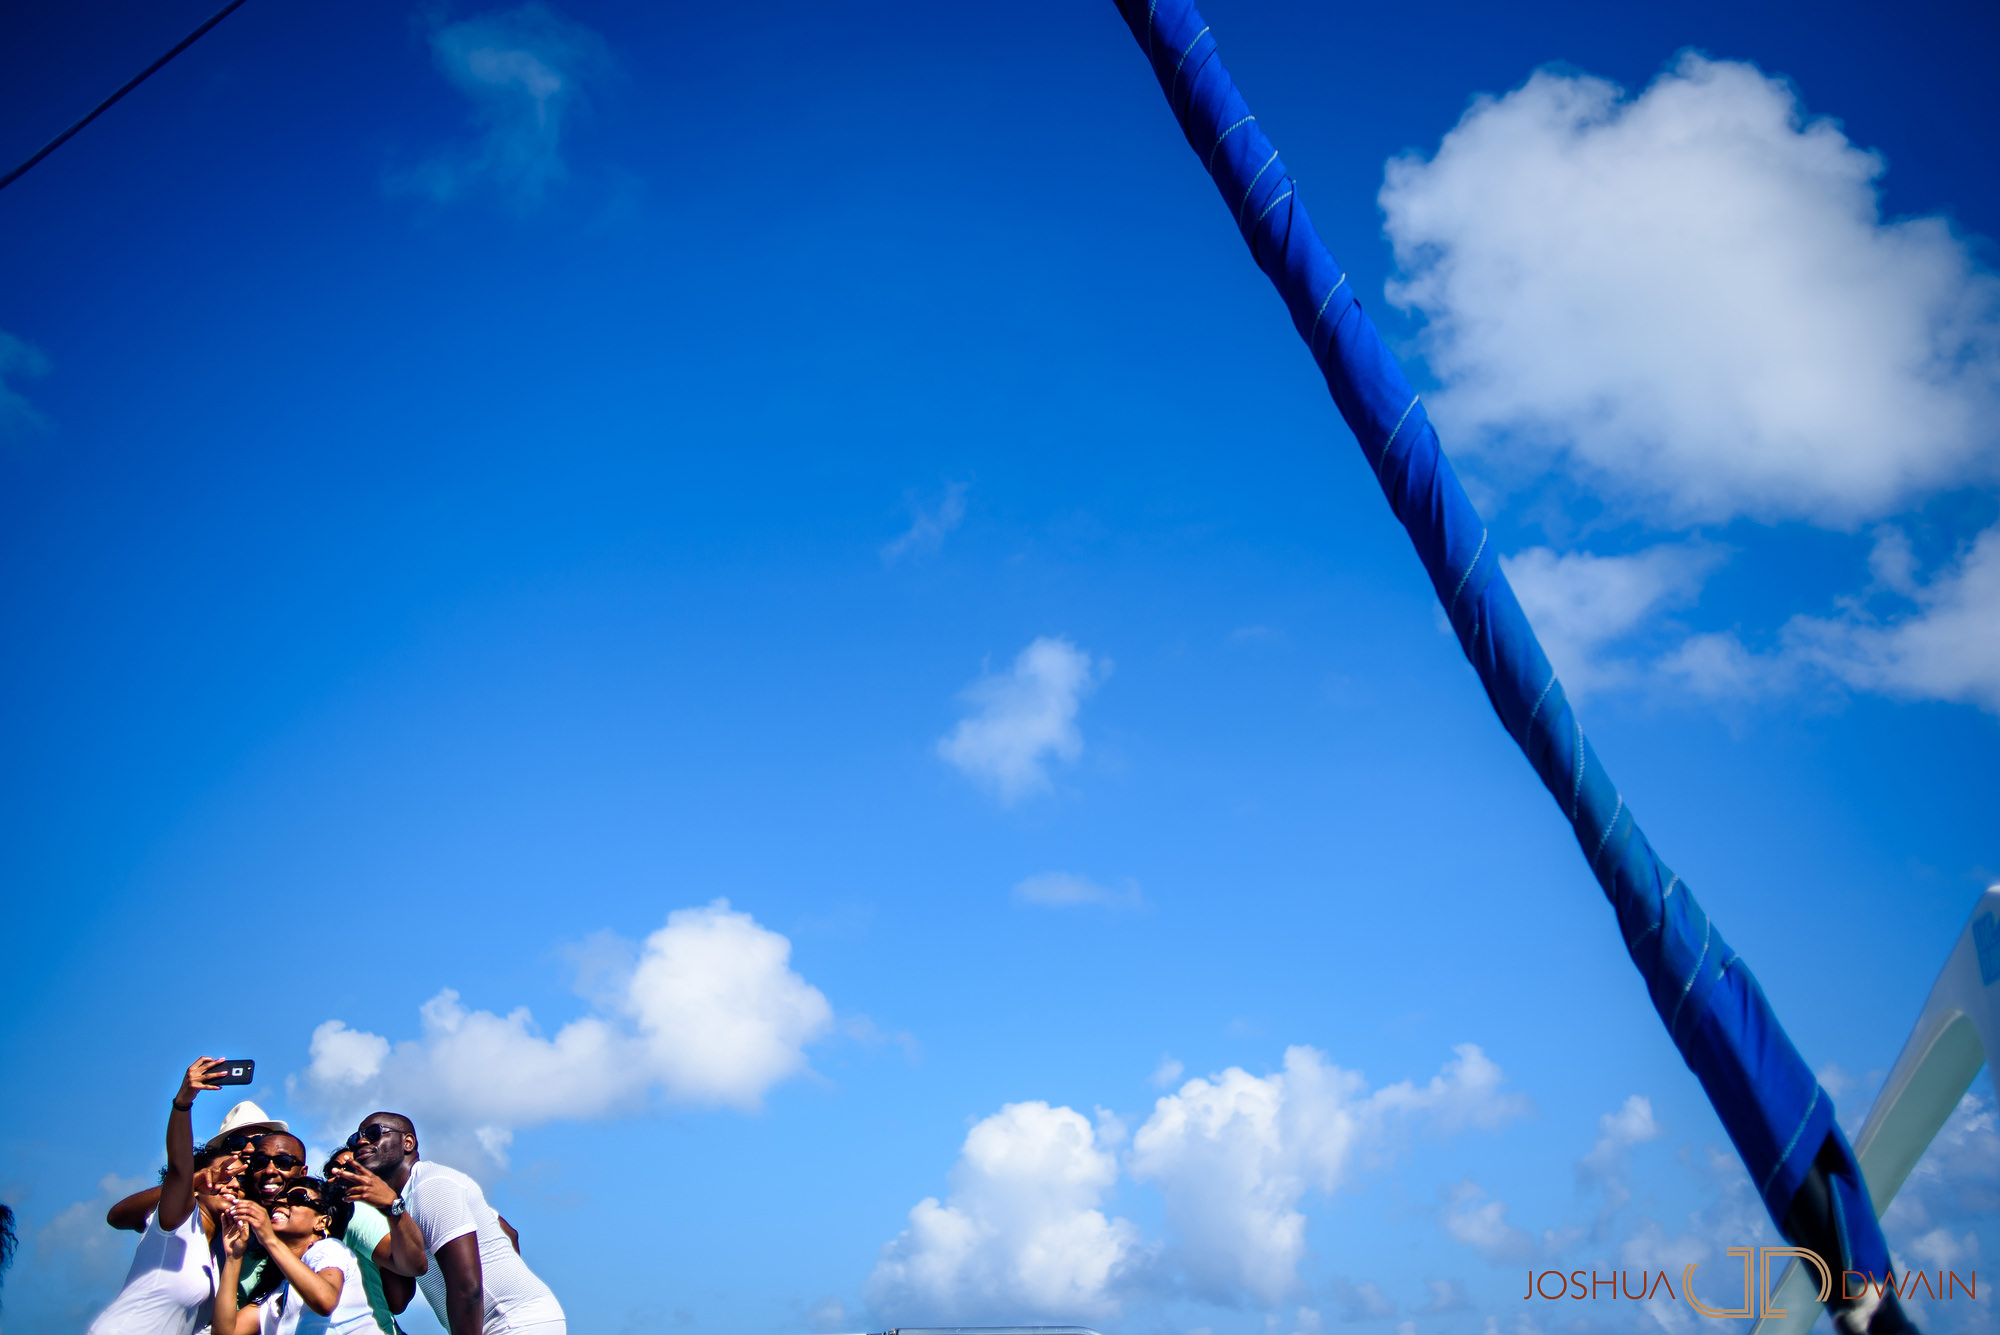 Penelope & Joseph's wedding in Turks & Caicos